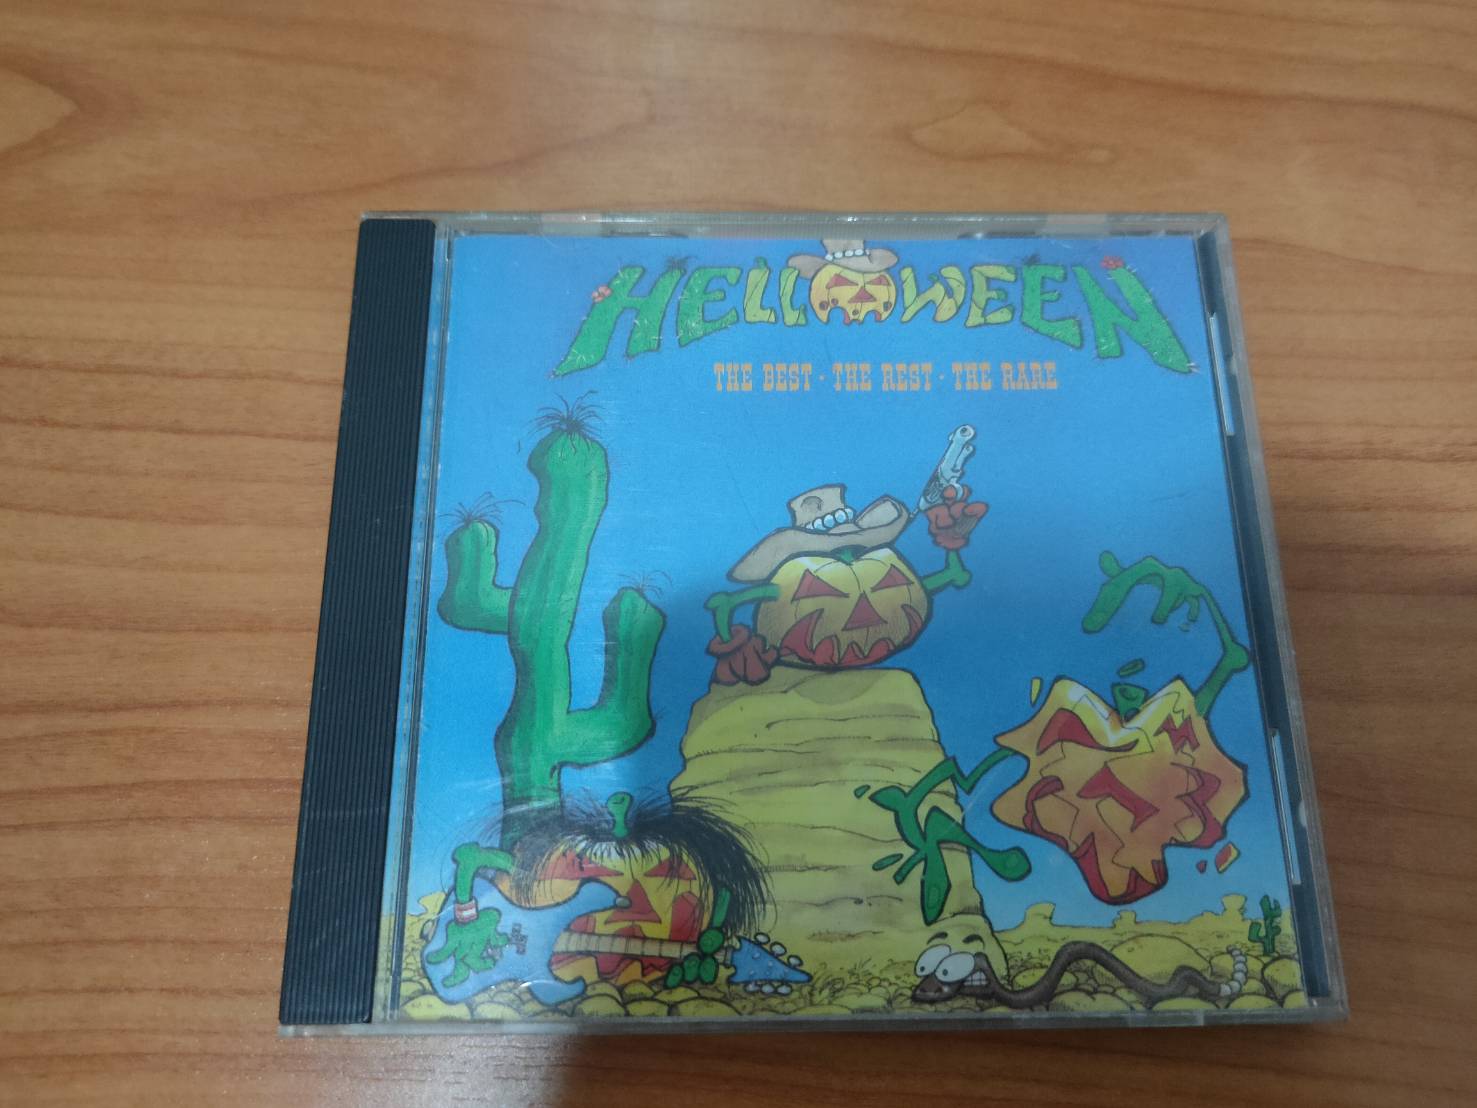 CD.MUSIC ซีดีเพลง เพลงสากล  Helloween The Best The Rare (***โปรดดูภาพสินค้าอย่างละเอียดก่อนทำการสั่งซื้อ*** )